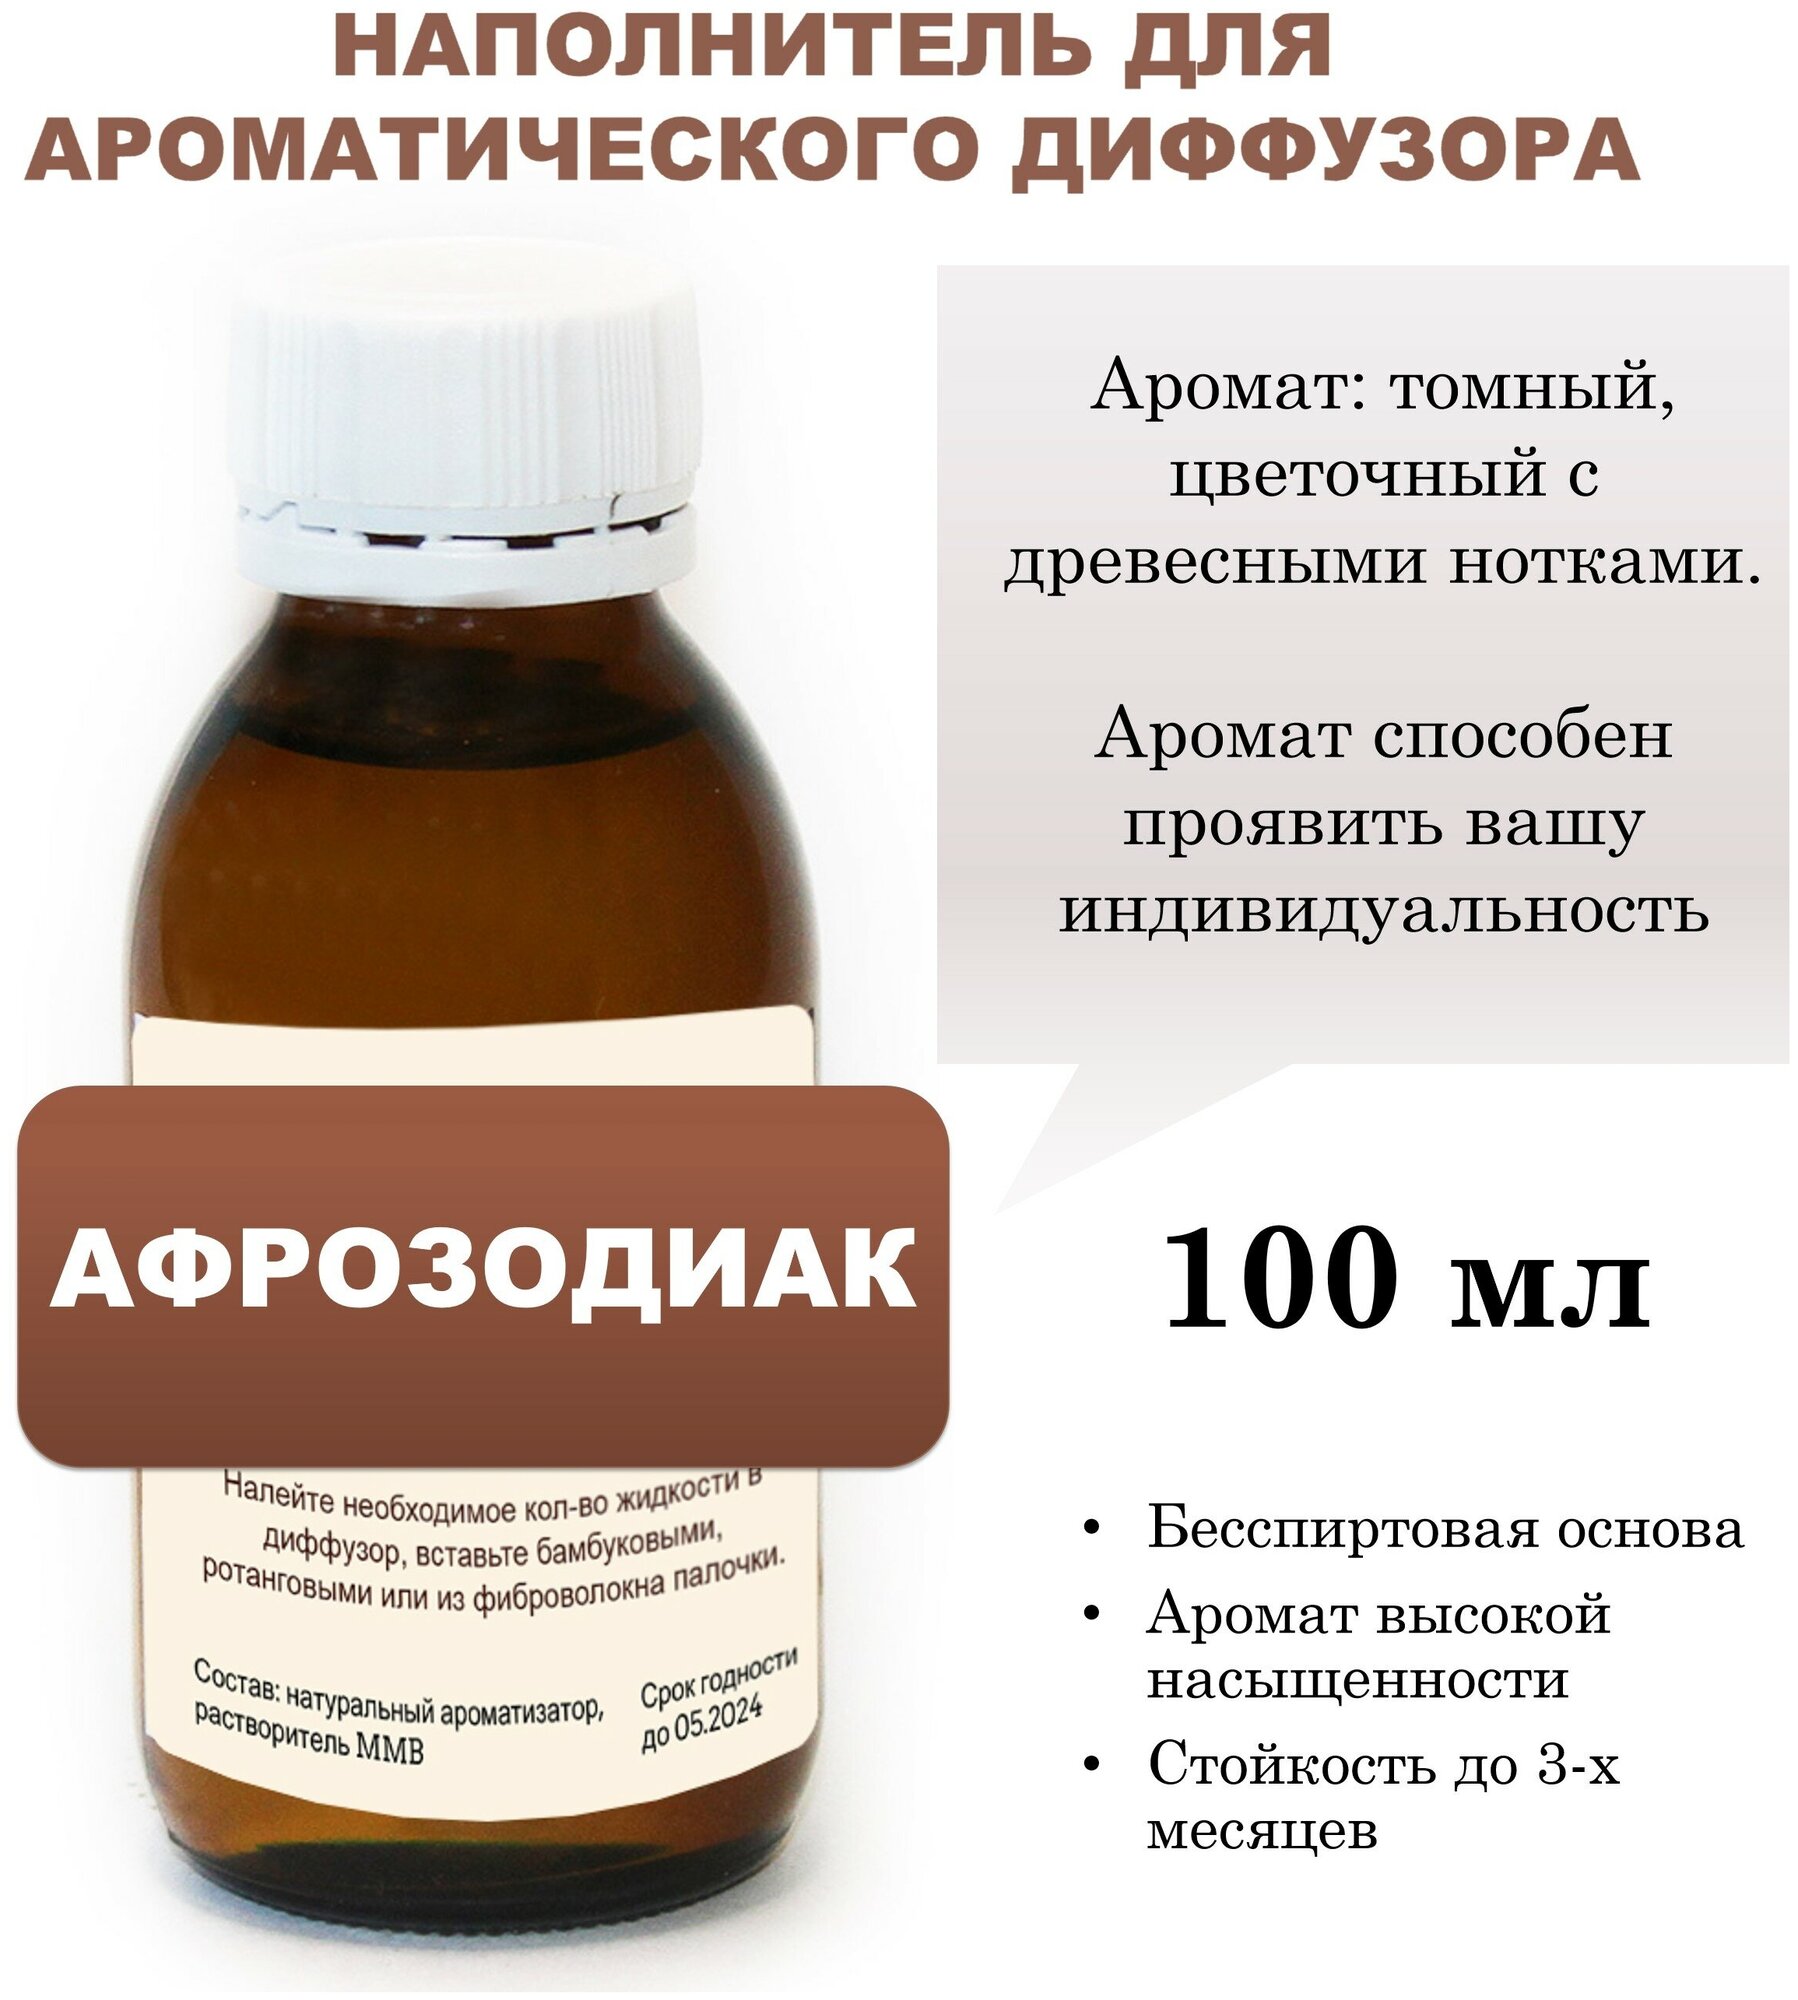 Афрозодиак - Наполнитель для ароматического диффузора (100 мл)